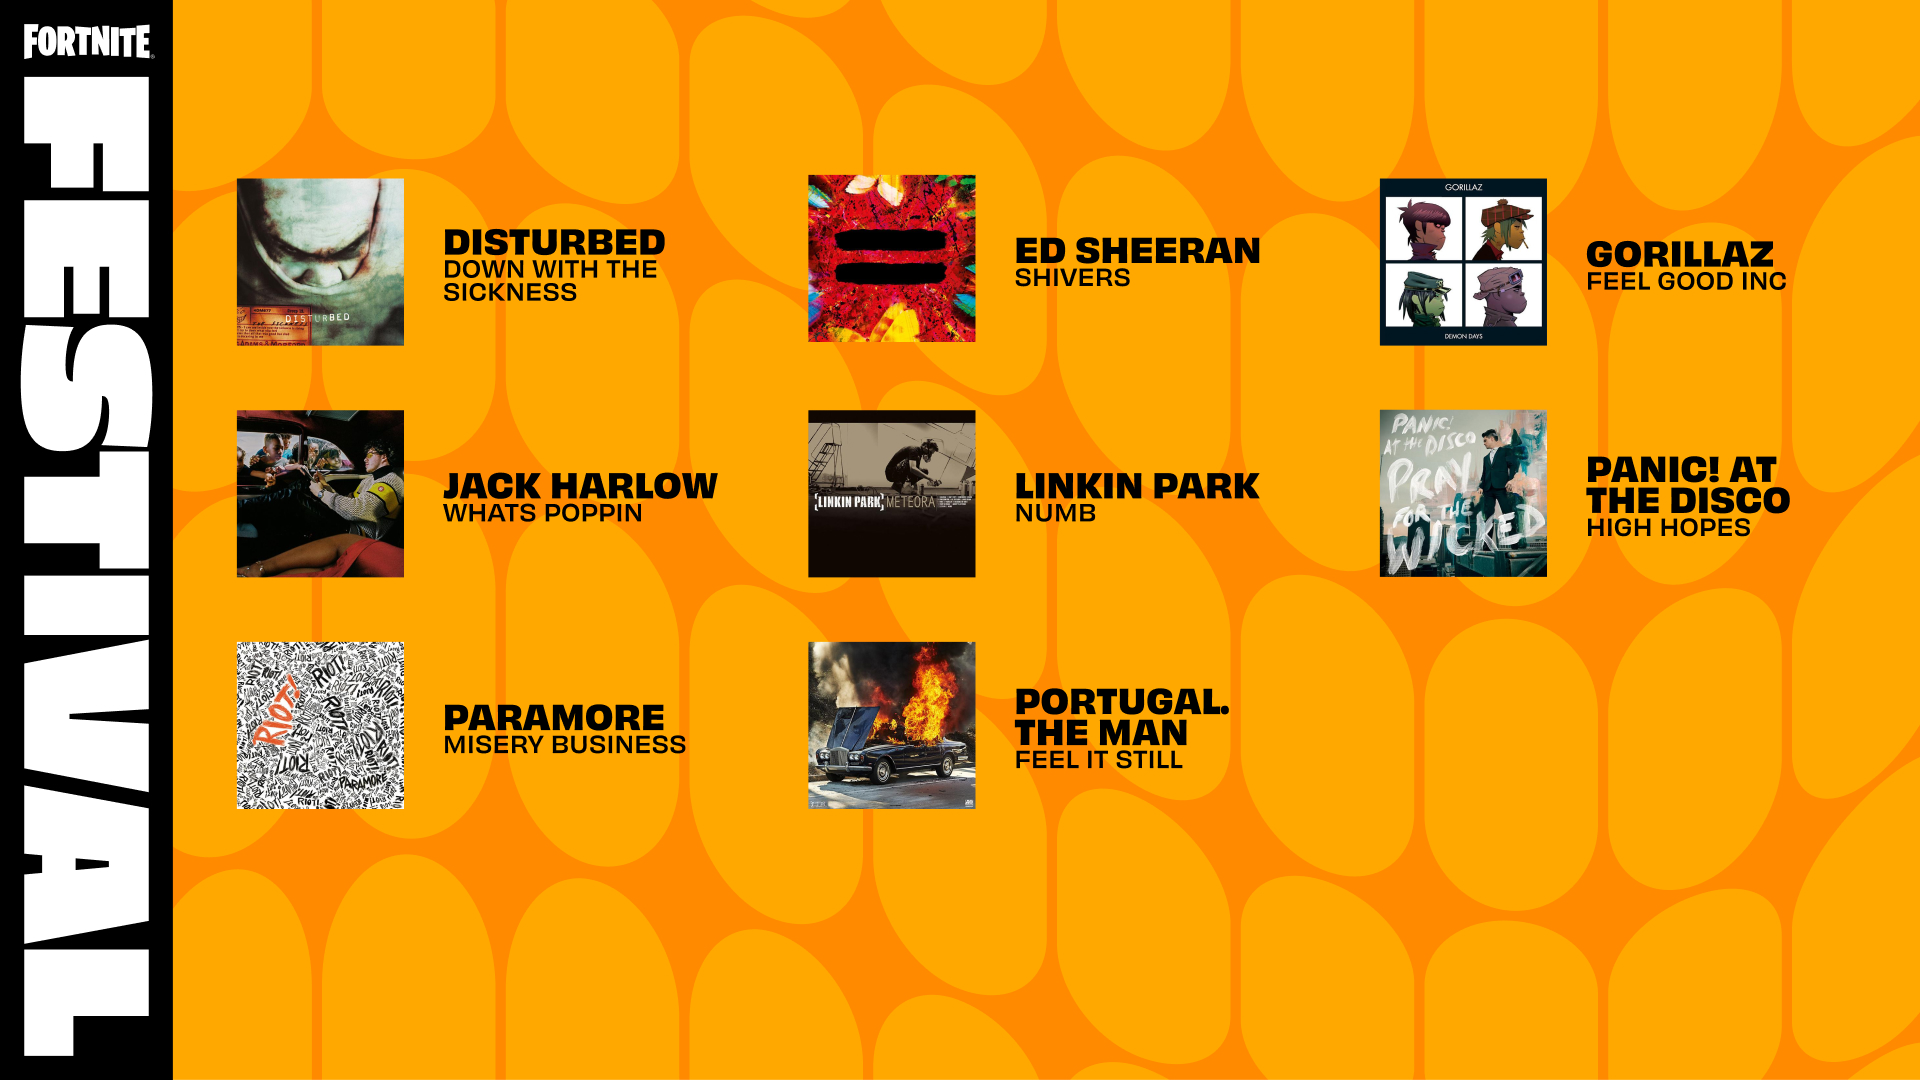 Fortnite Pageant: New Jam Tracks Announced (Ed Sheeran, Jack Harlow, Gorillaz)